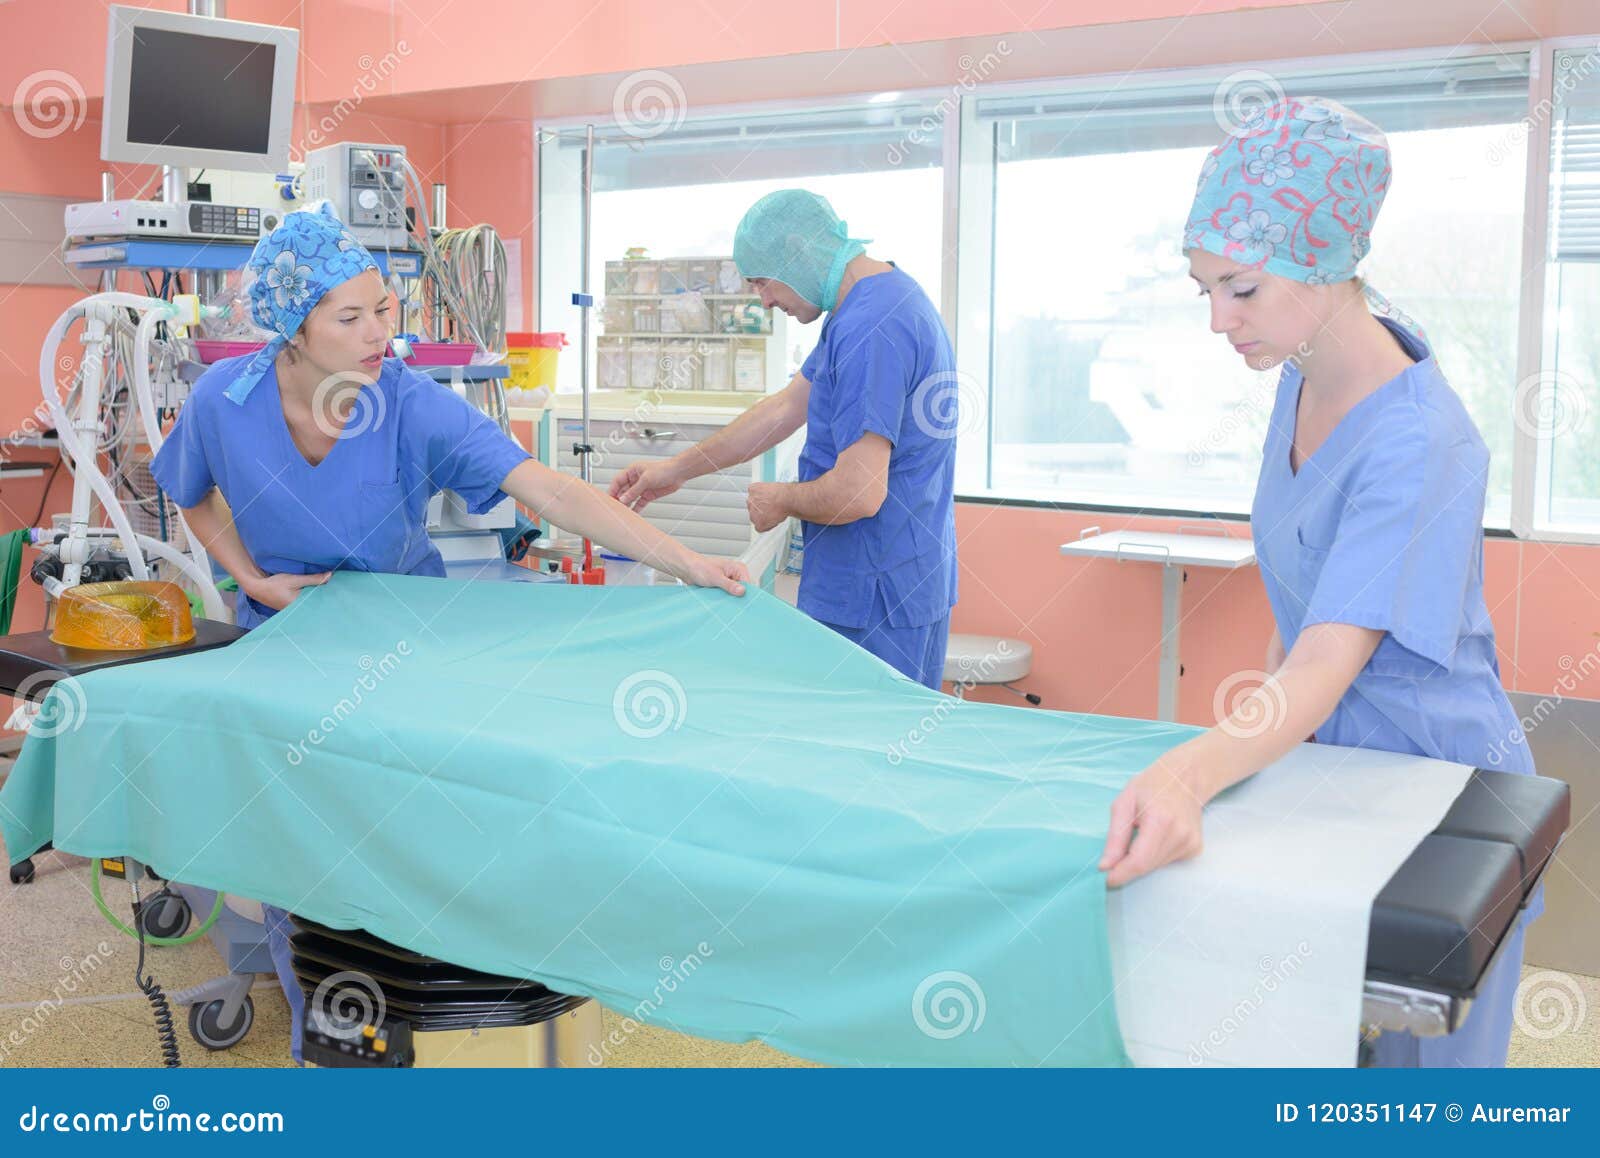 Медсестра перед операцией